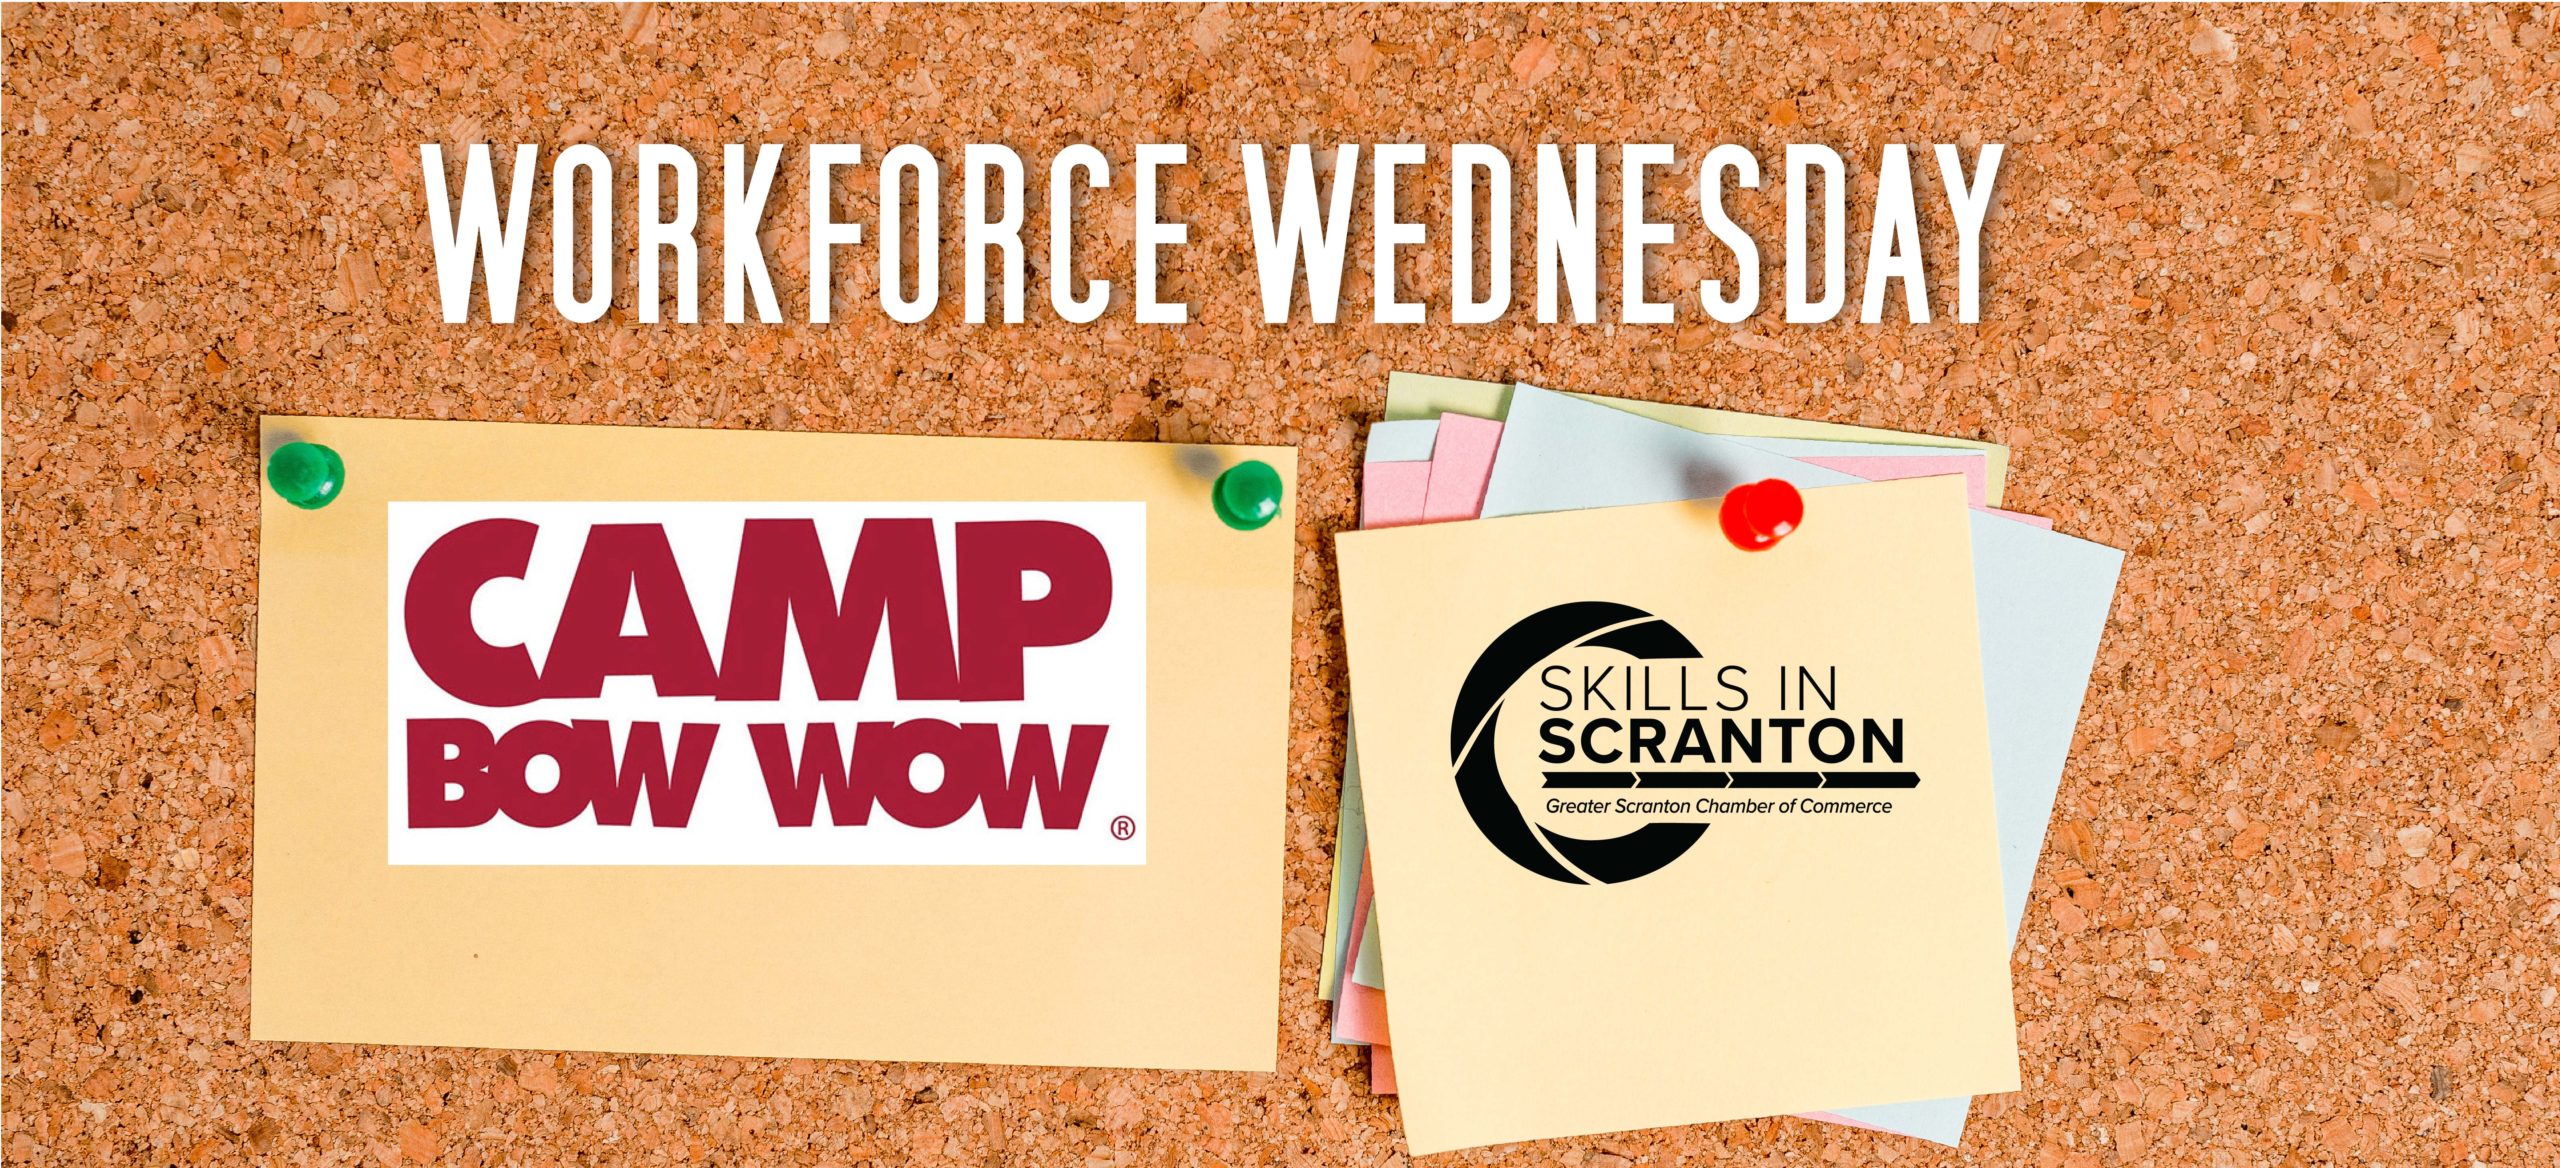 Workforce Wednesday: Camp Bow Wow